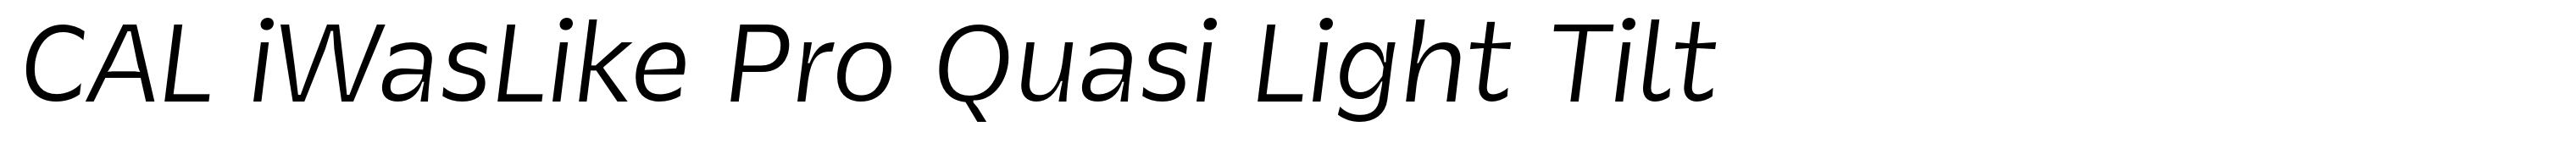 CAL iWasLike Pro Quasi Light Tilt